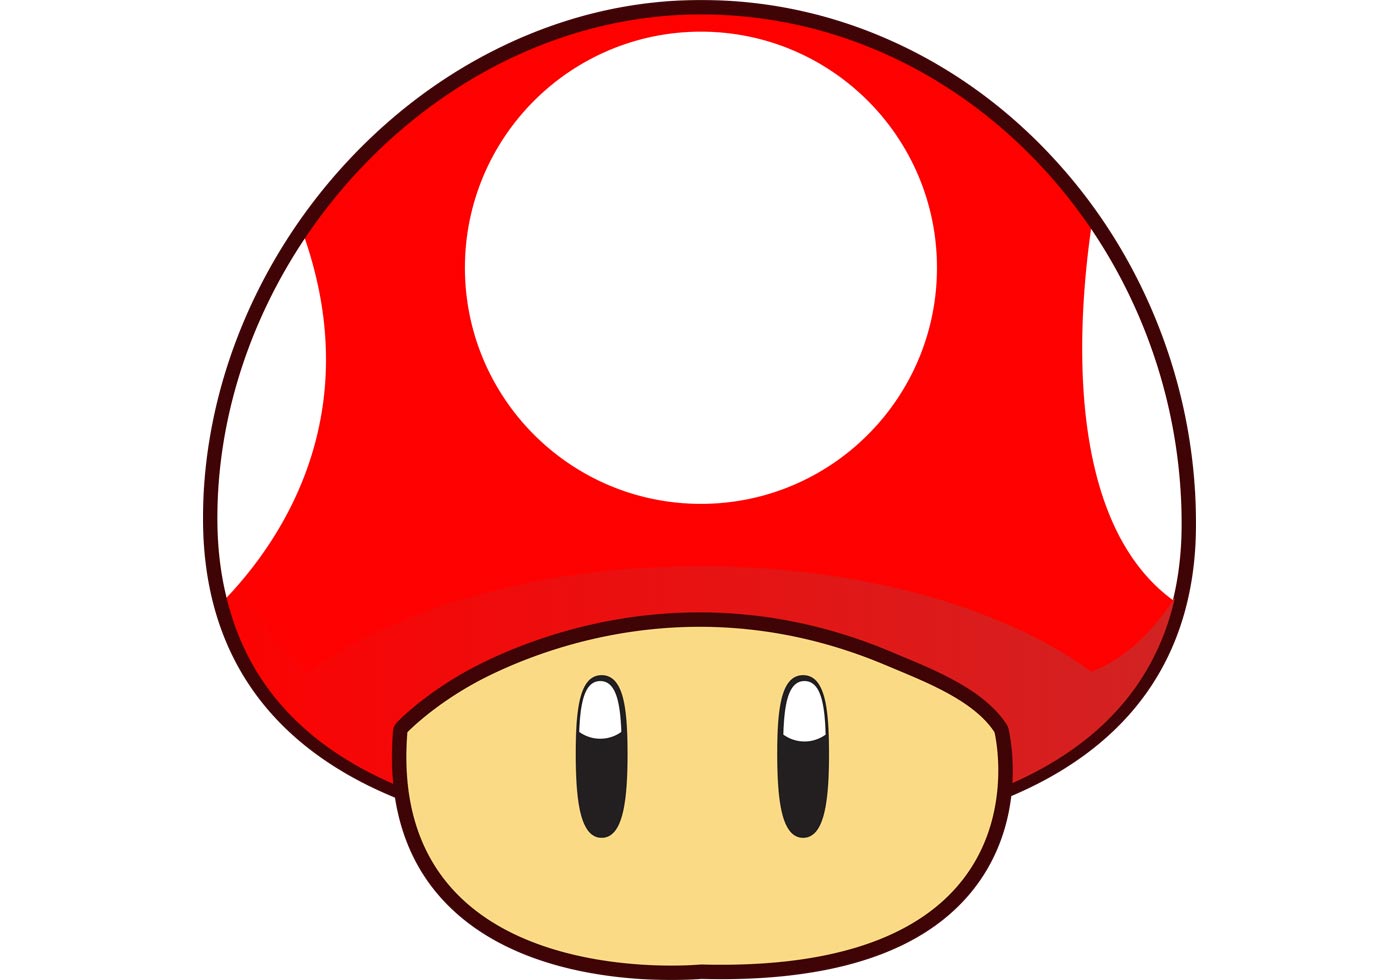 Mario Free Vector Art - (12263 Free Downloads)